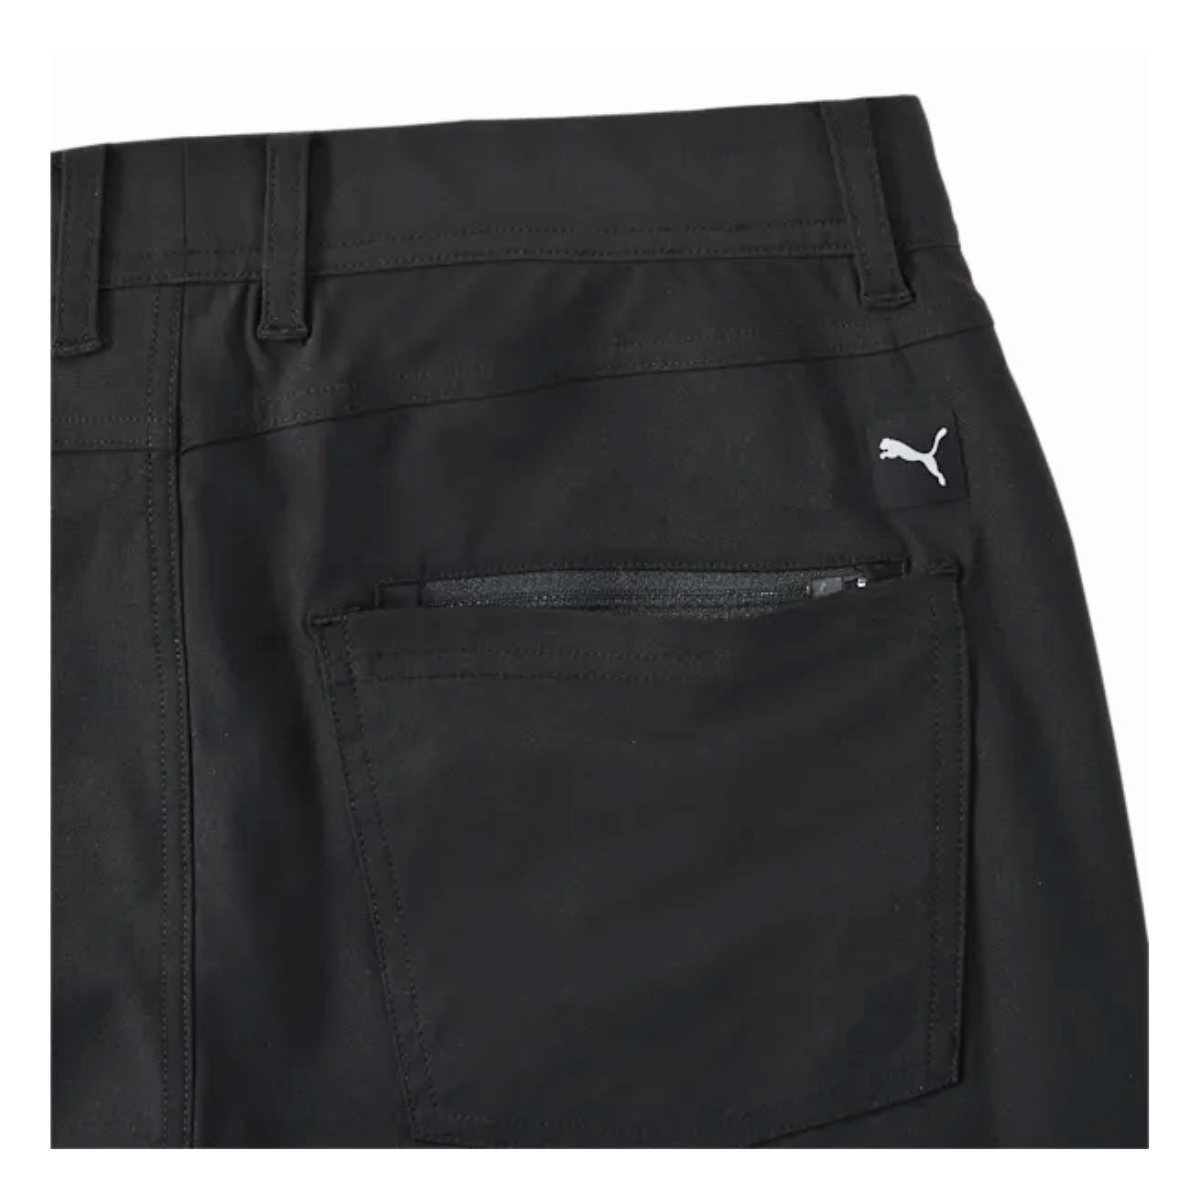 Puma 101 Men's Golf Trousers (US Size)